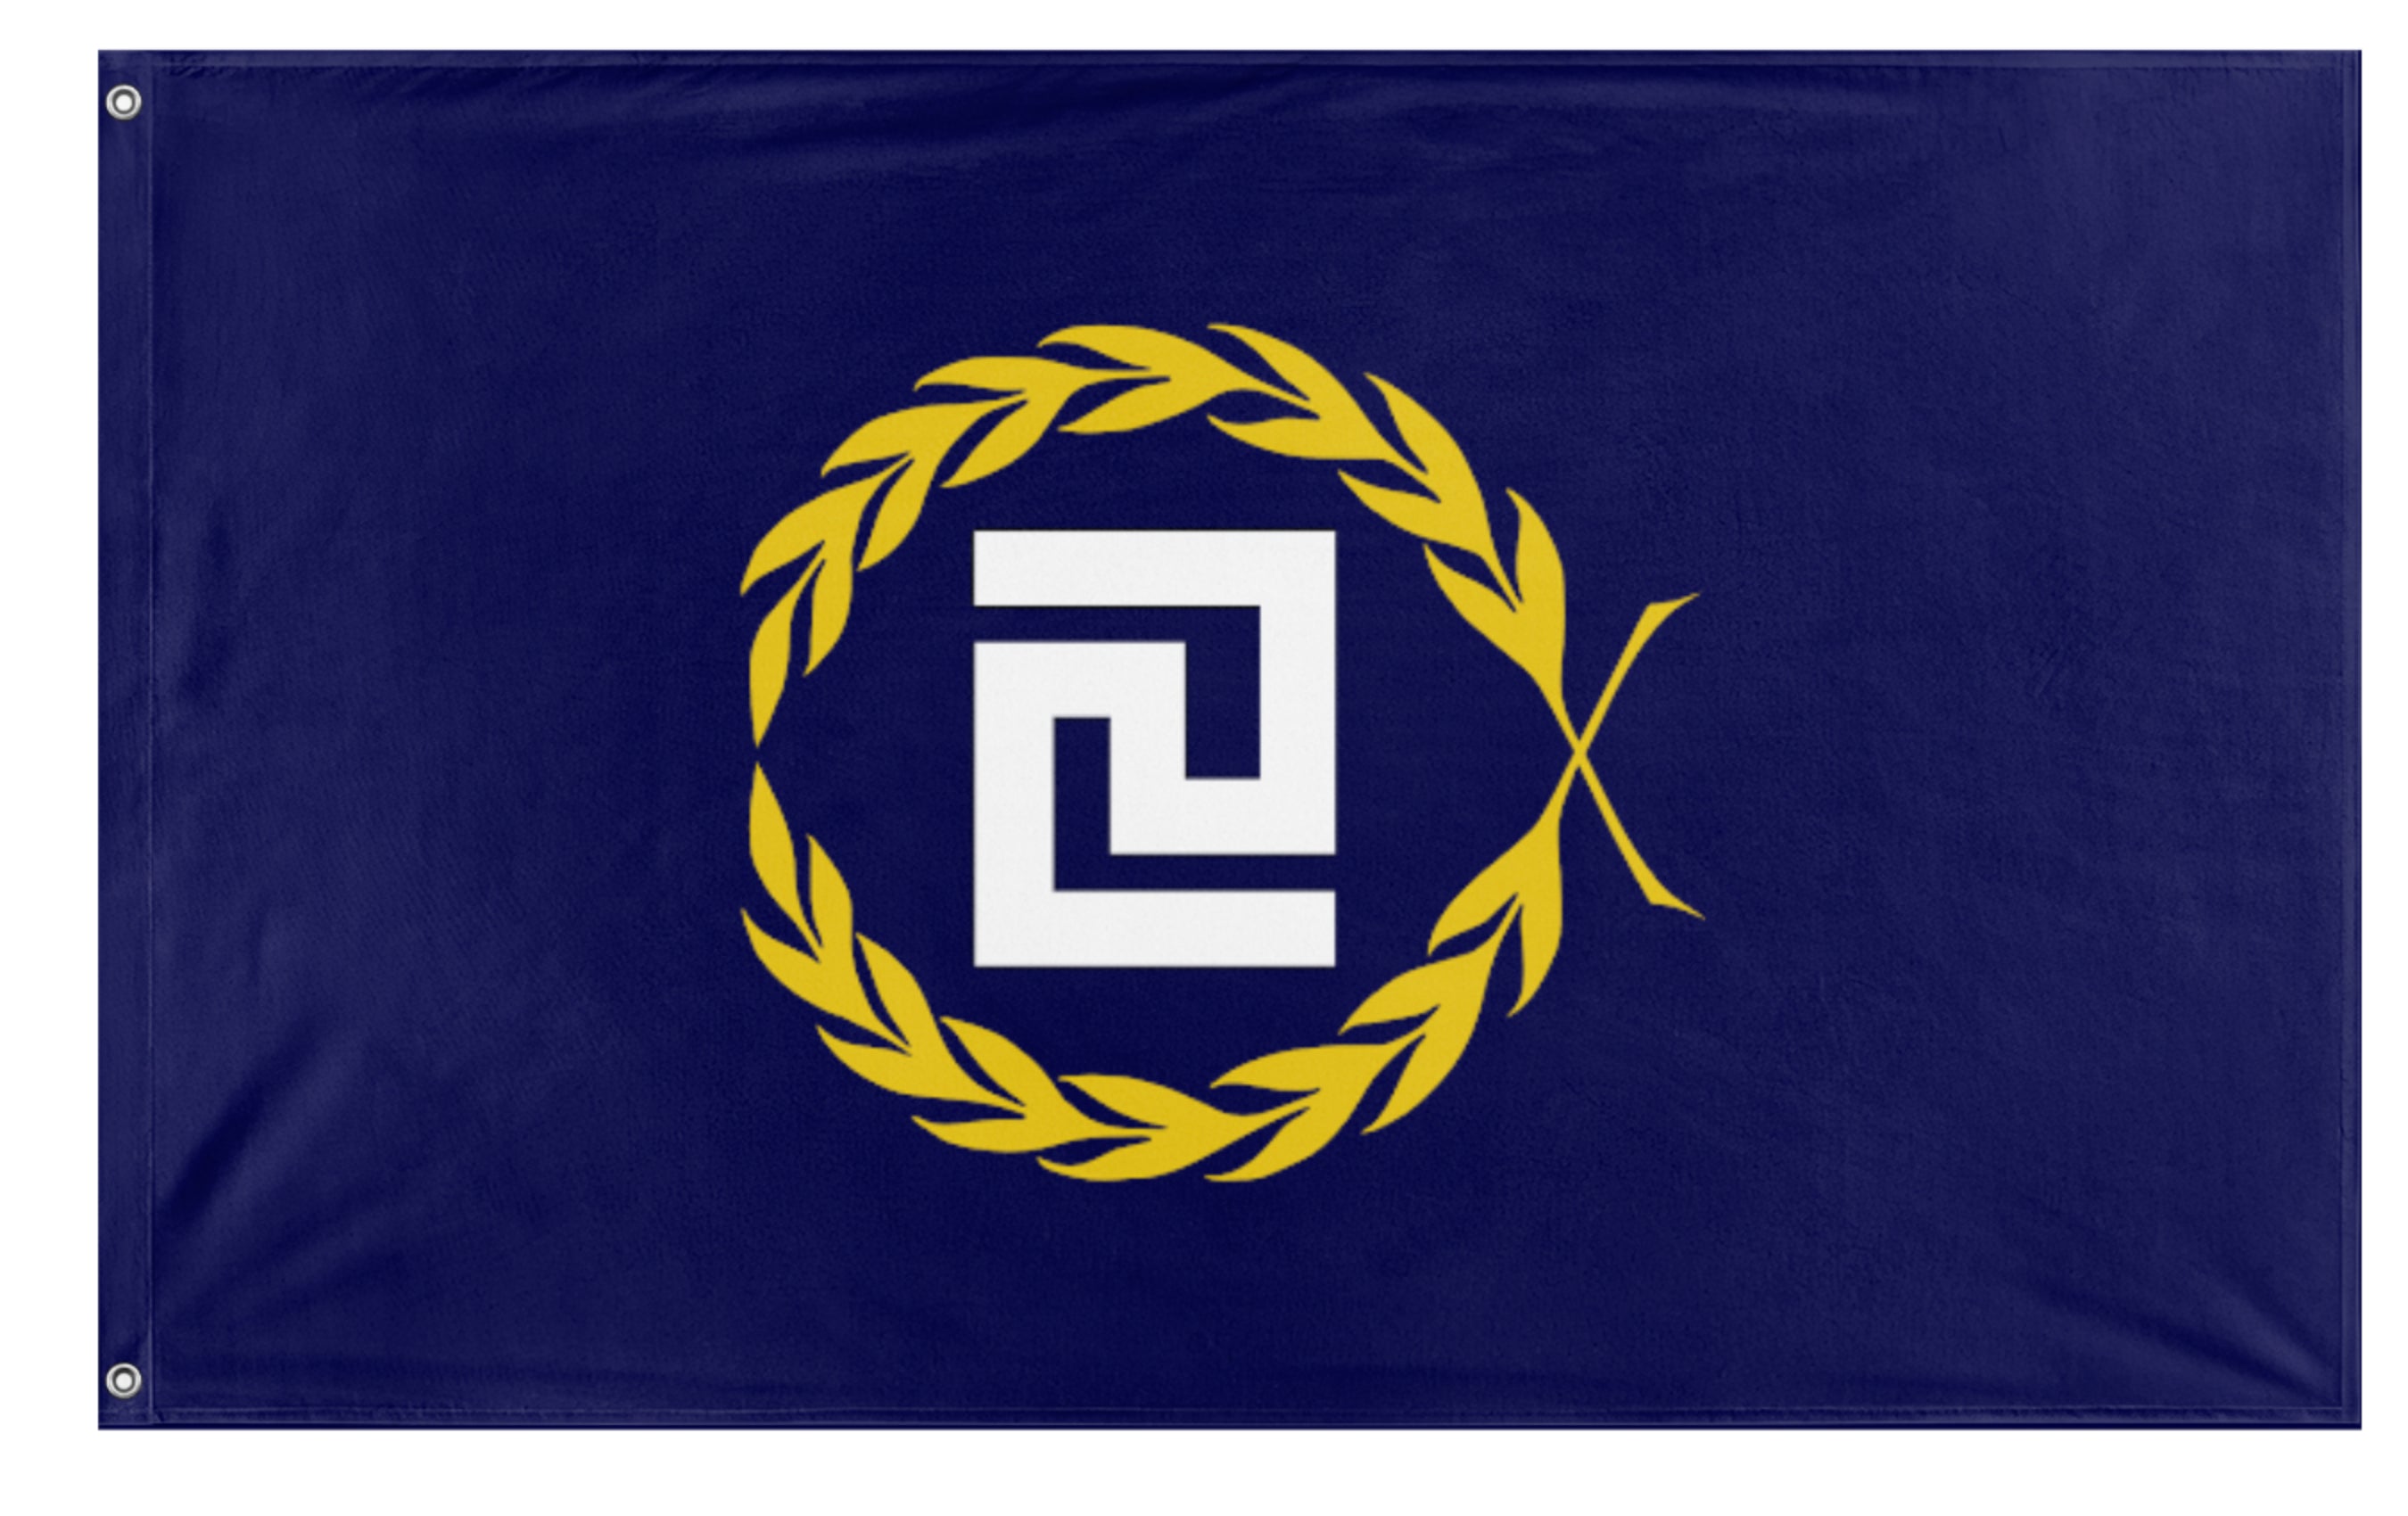 athenian democracy symbol